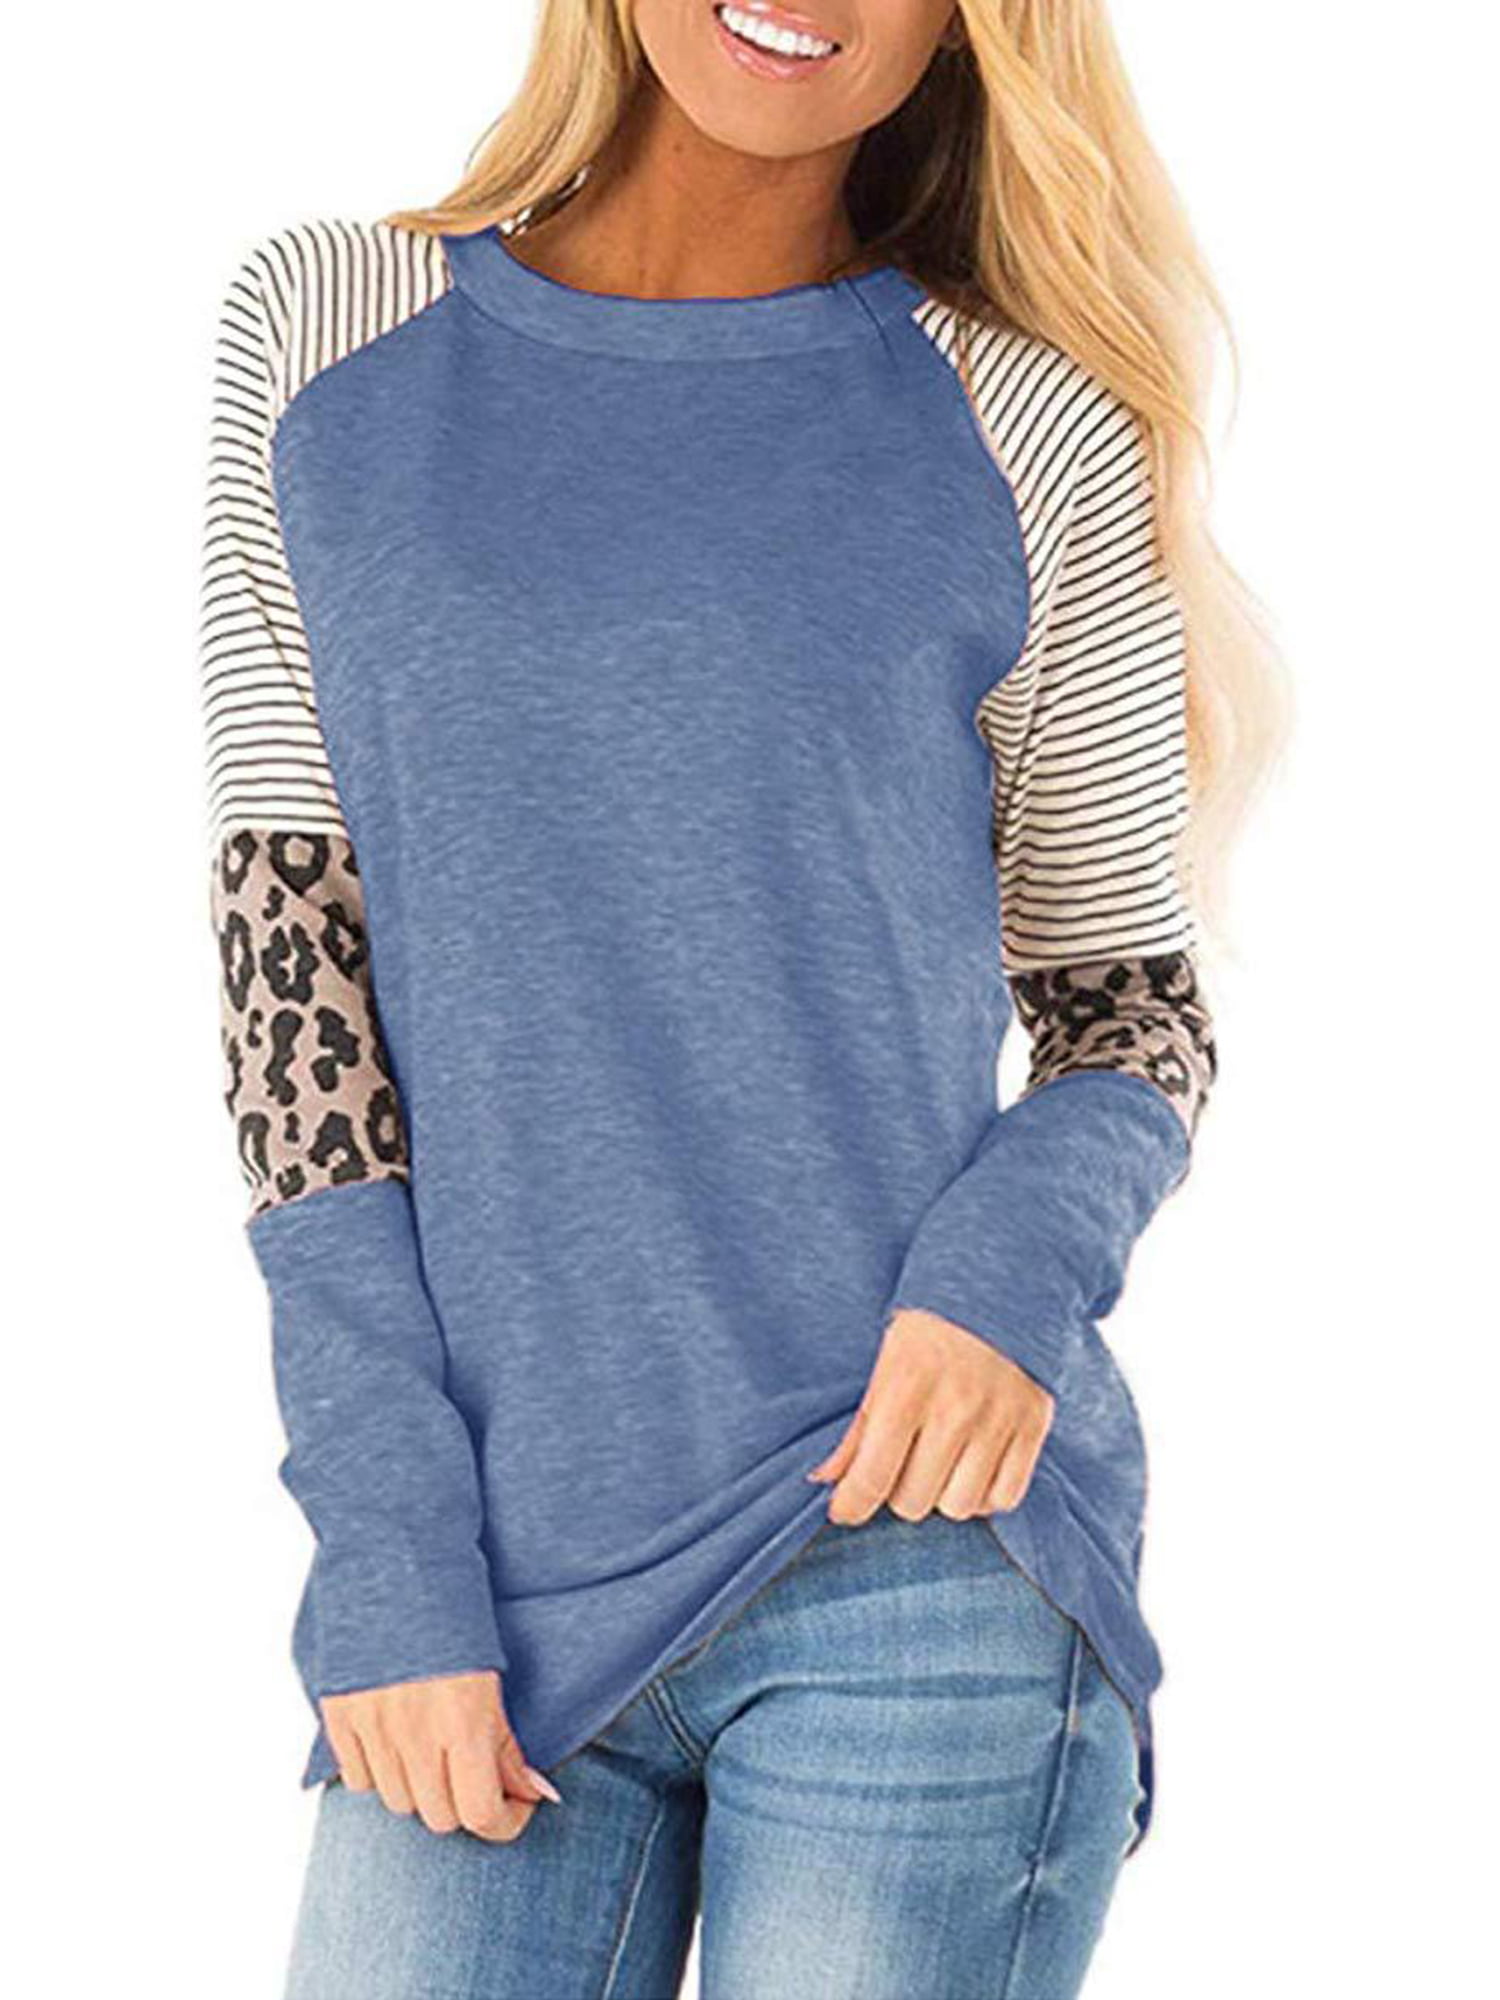 Onegirl Women Casual Leopard Stripe Splicing Long Sleeve Loose O Neck Tunic Top Shirts Blouse Sweatshirt Pullover